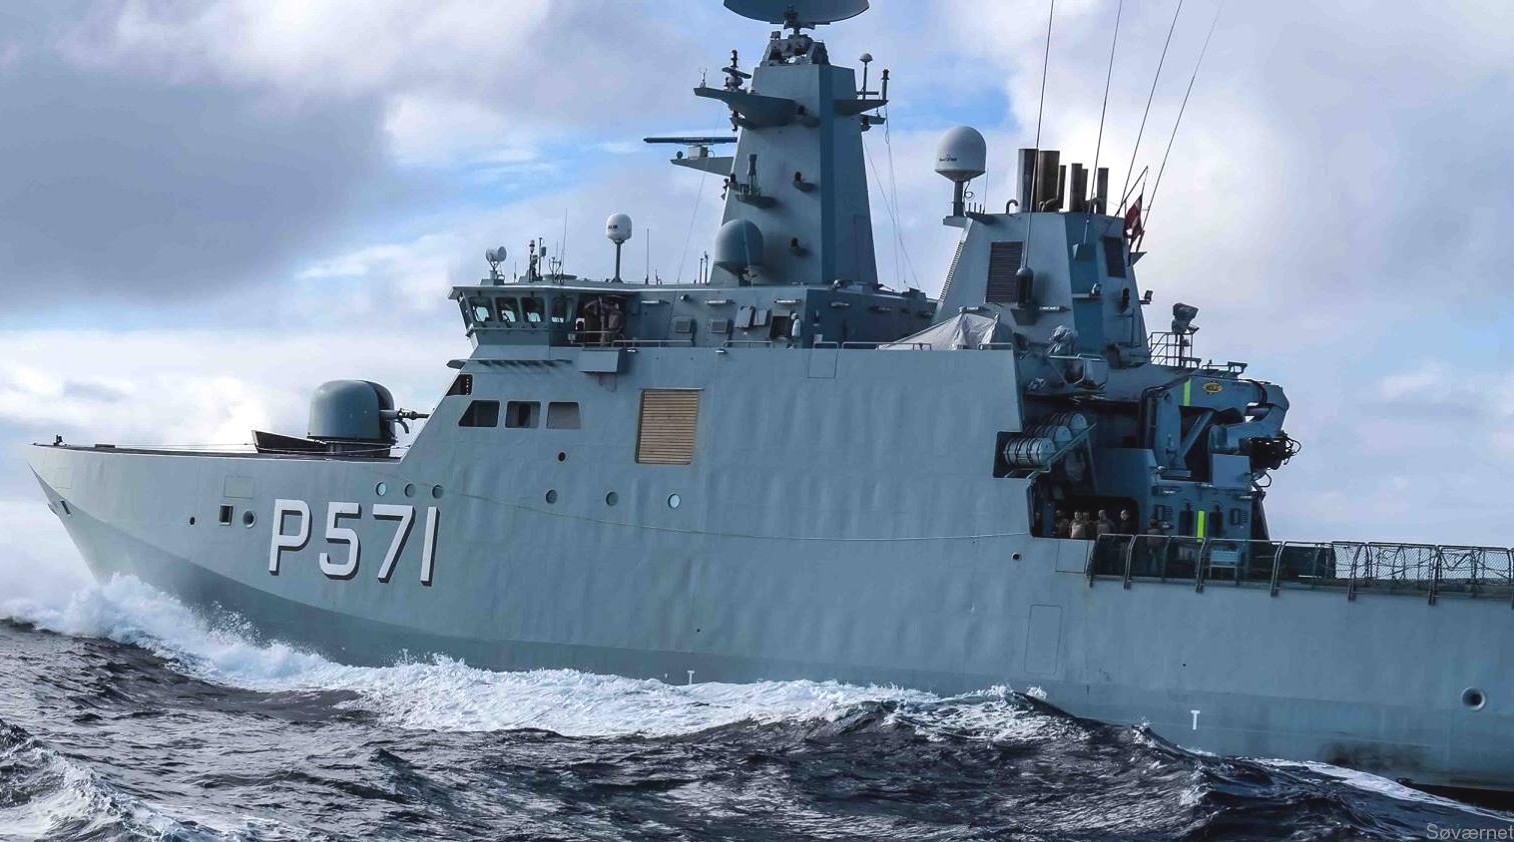 p-571 hdms ejnar mikkelsen knud rasmussen class offshore patrol vessel opv royal danish navy inspektionsfartøj 39